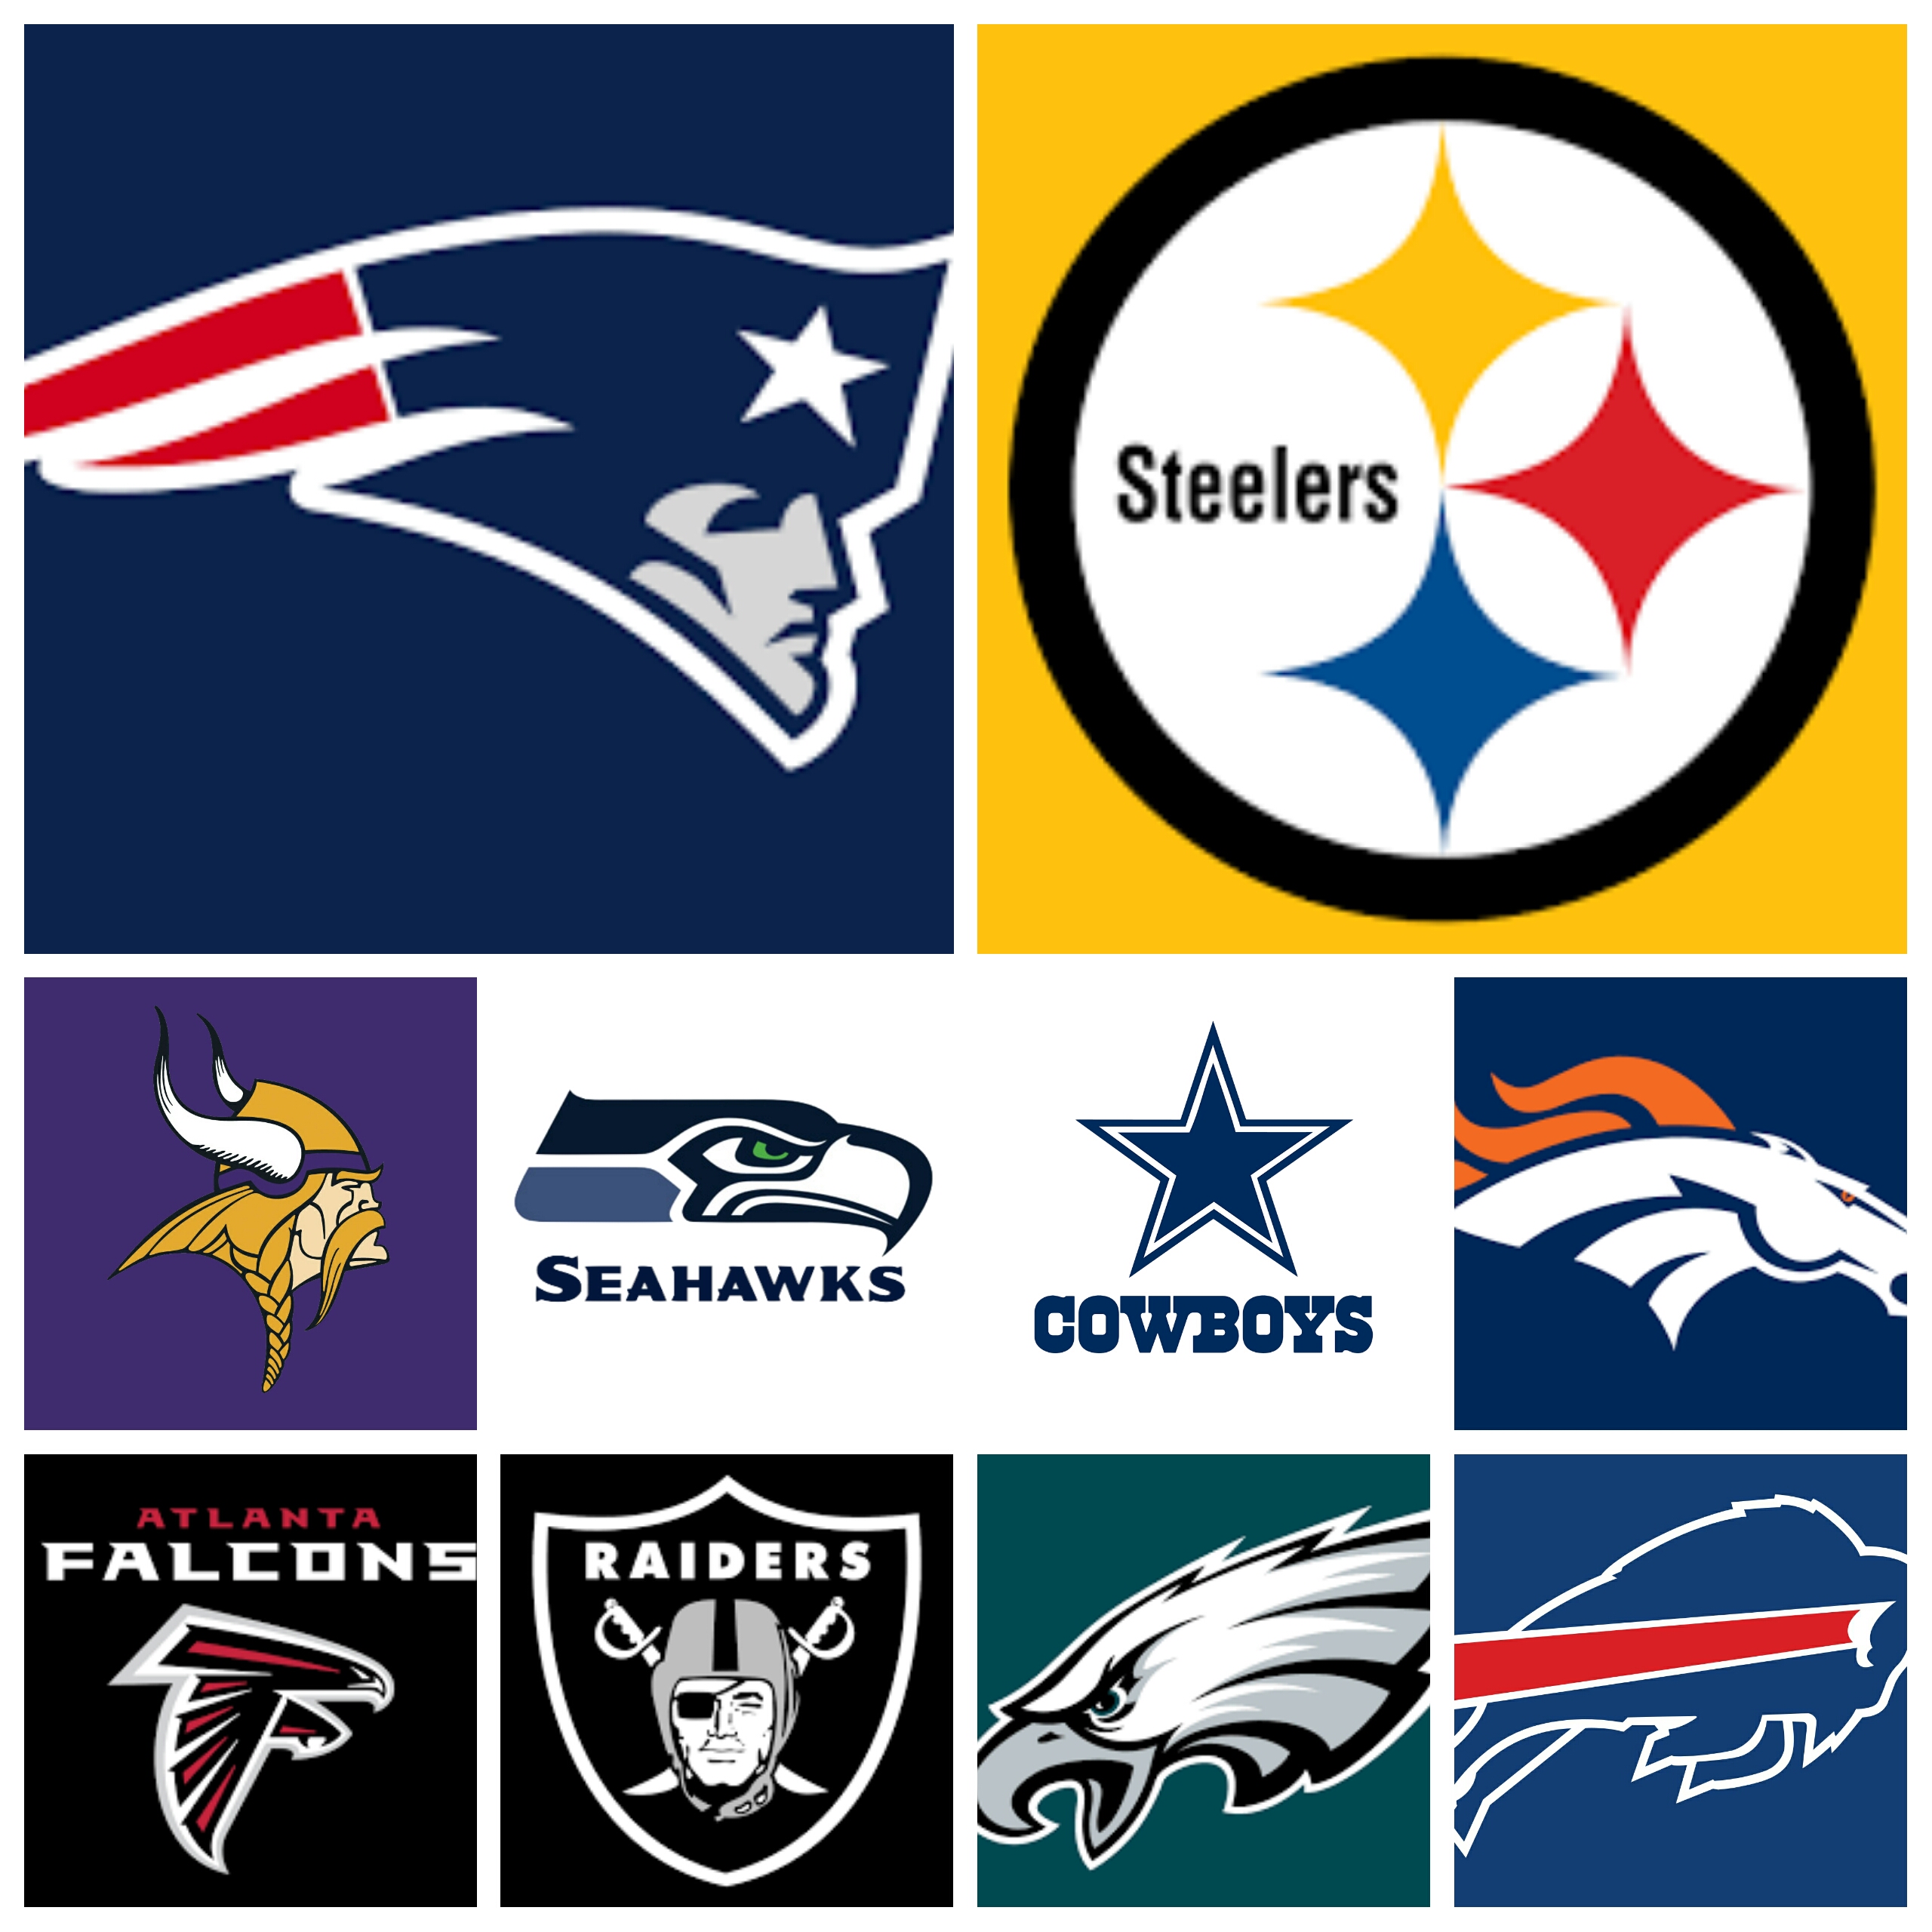 Fanatics View Top 10 NFL Rankings (Week 6)